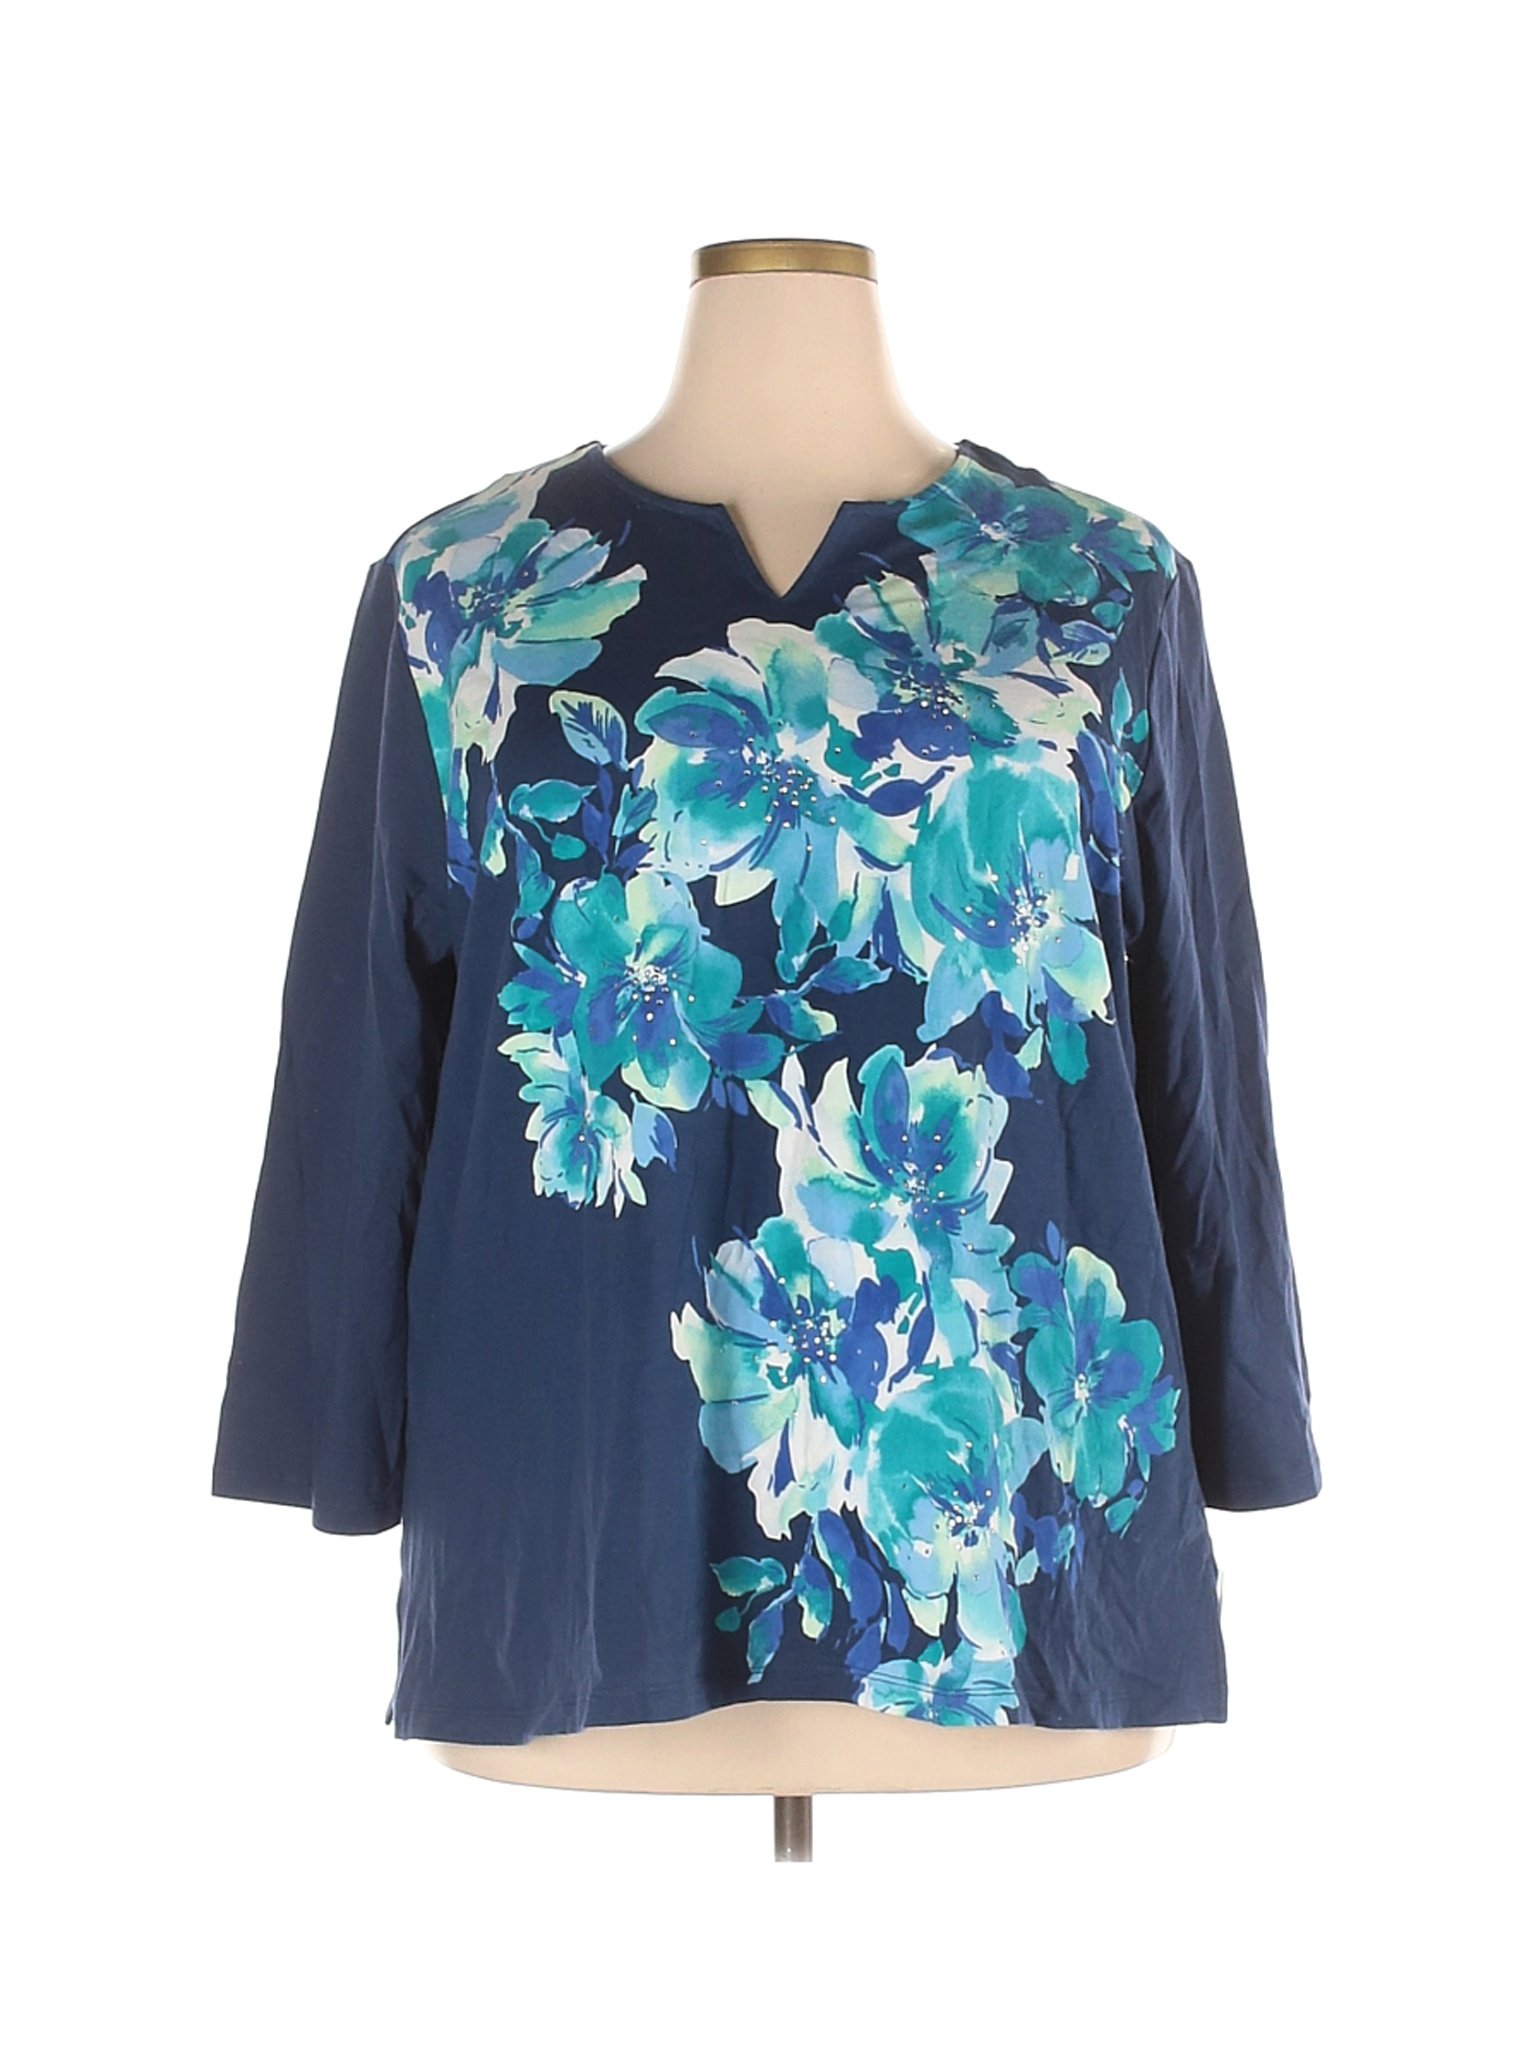 NWT Alfred Dunner Women Blue 3/4 Sleeve Top 2X Plus | eBay